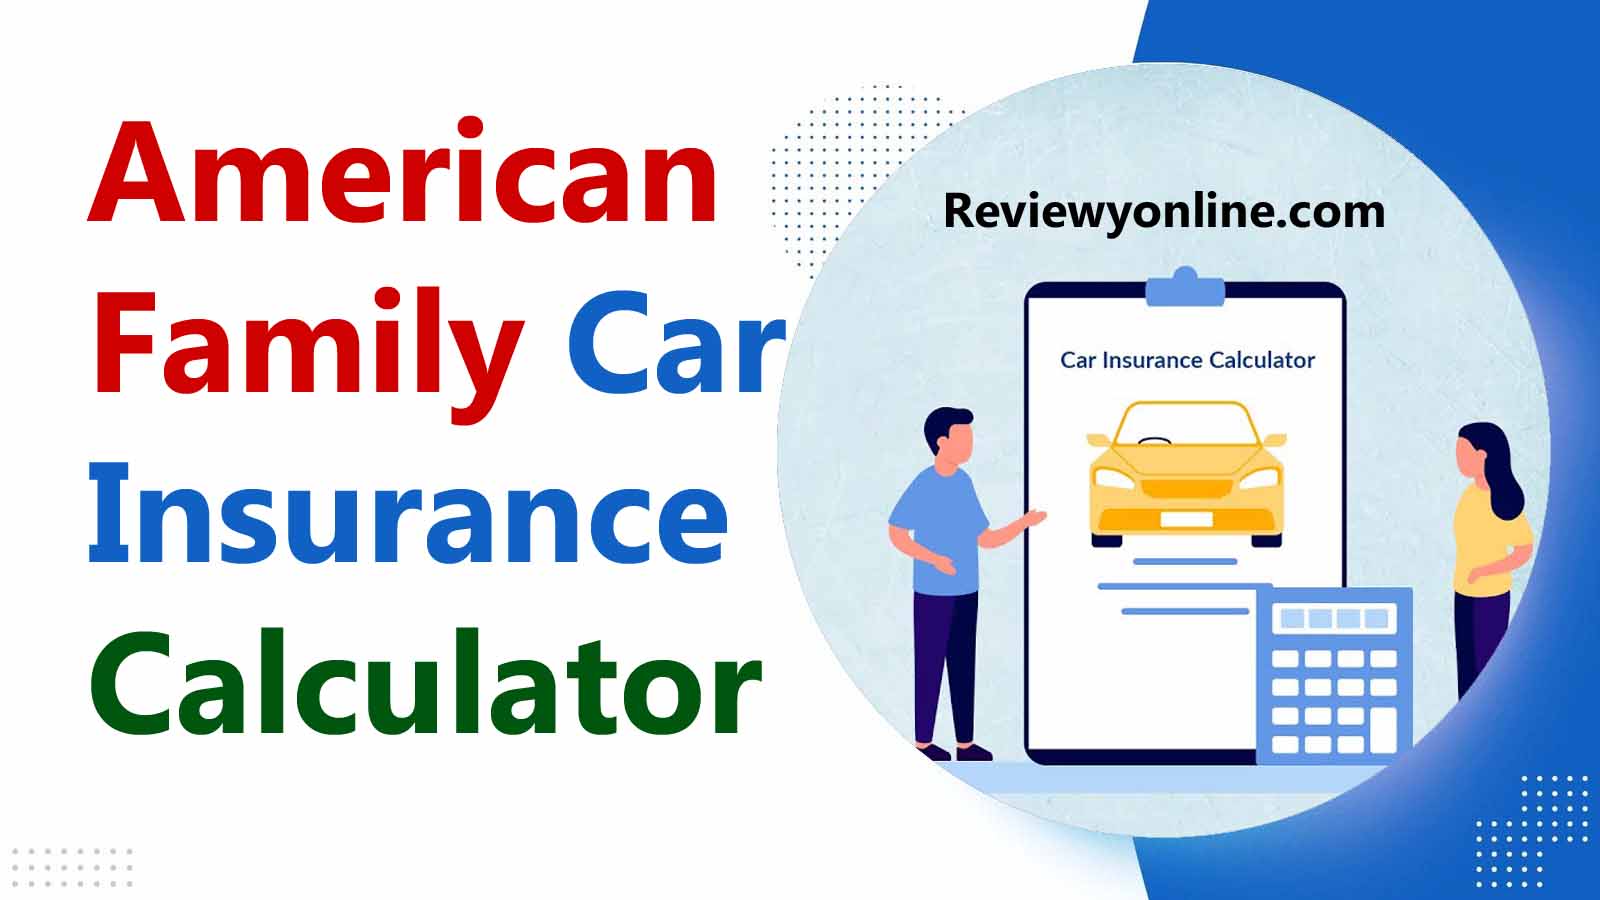 American Family Car Insurance Calculator Reviewyonline.com